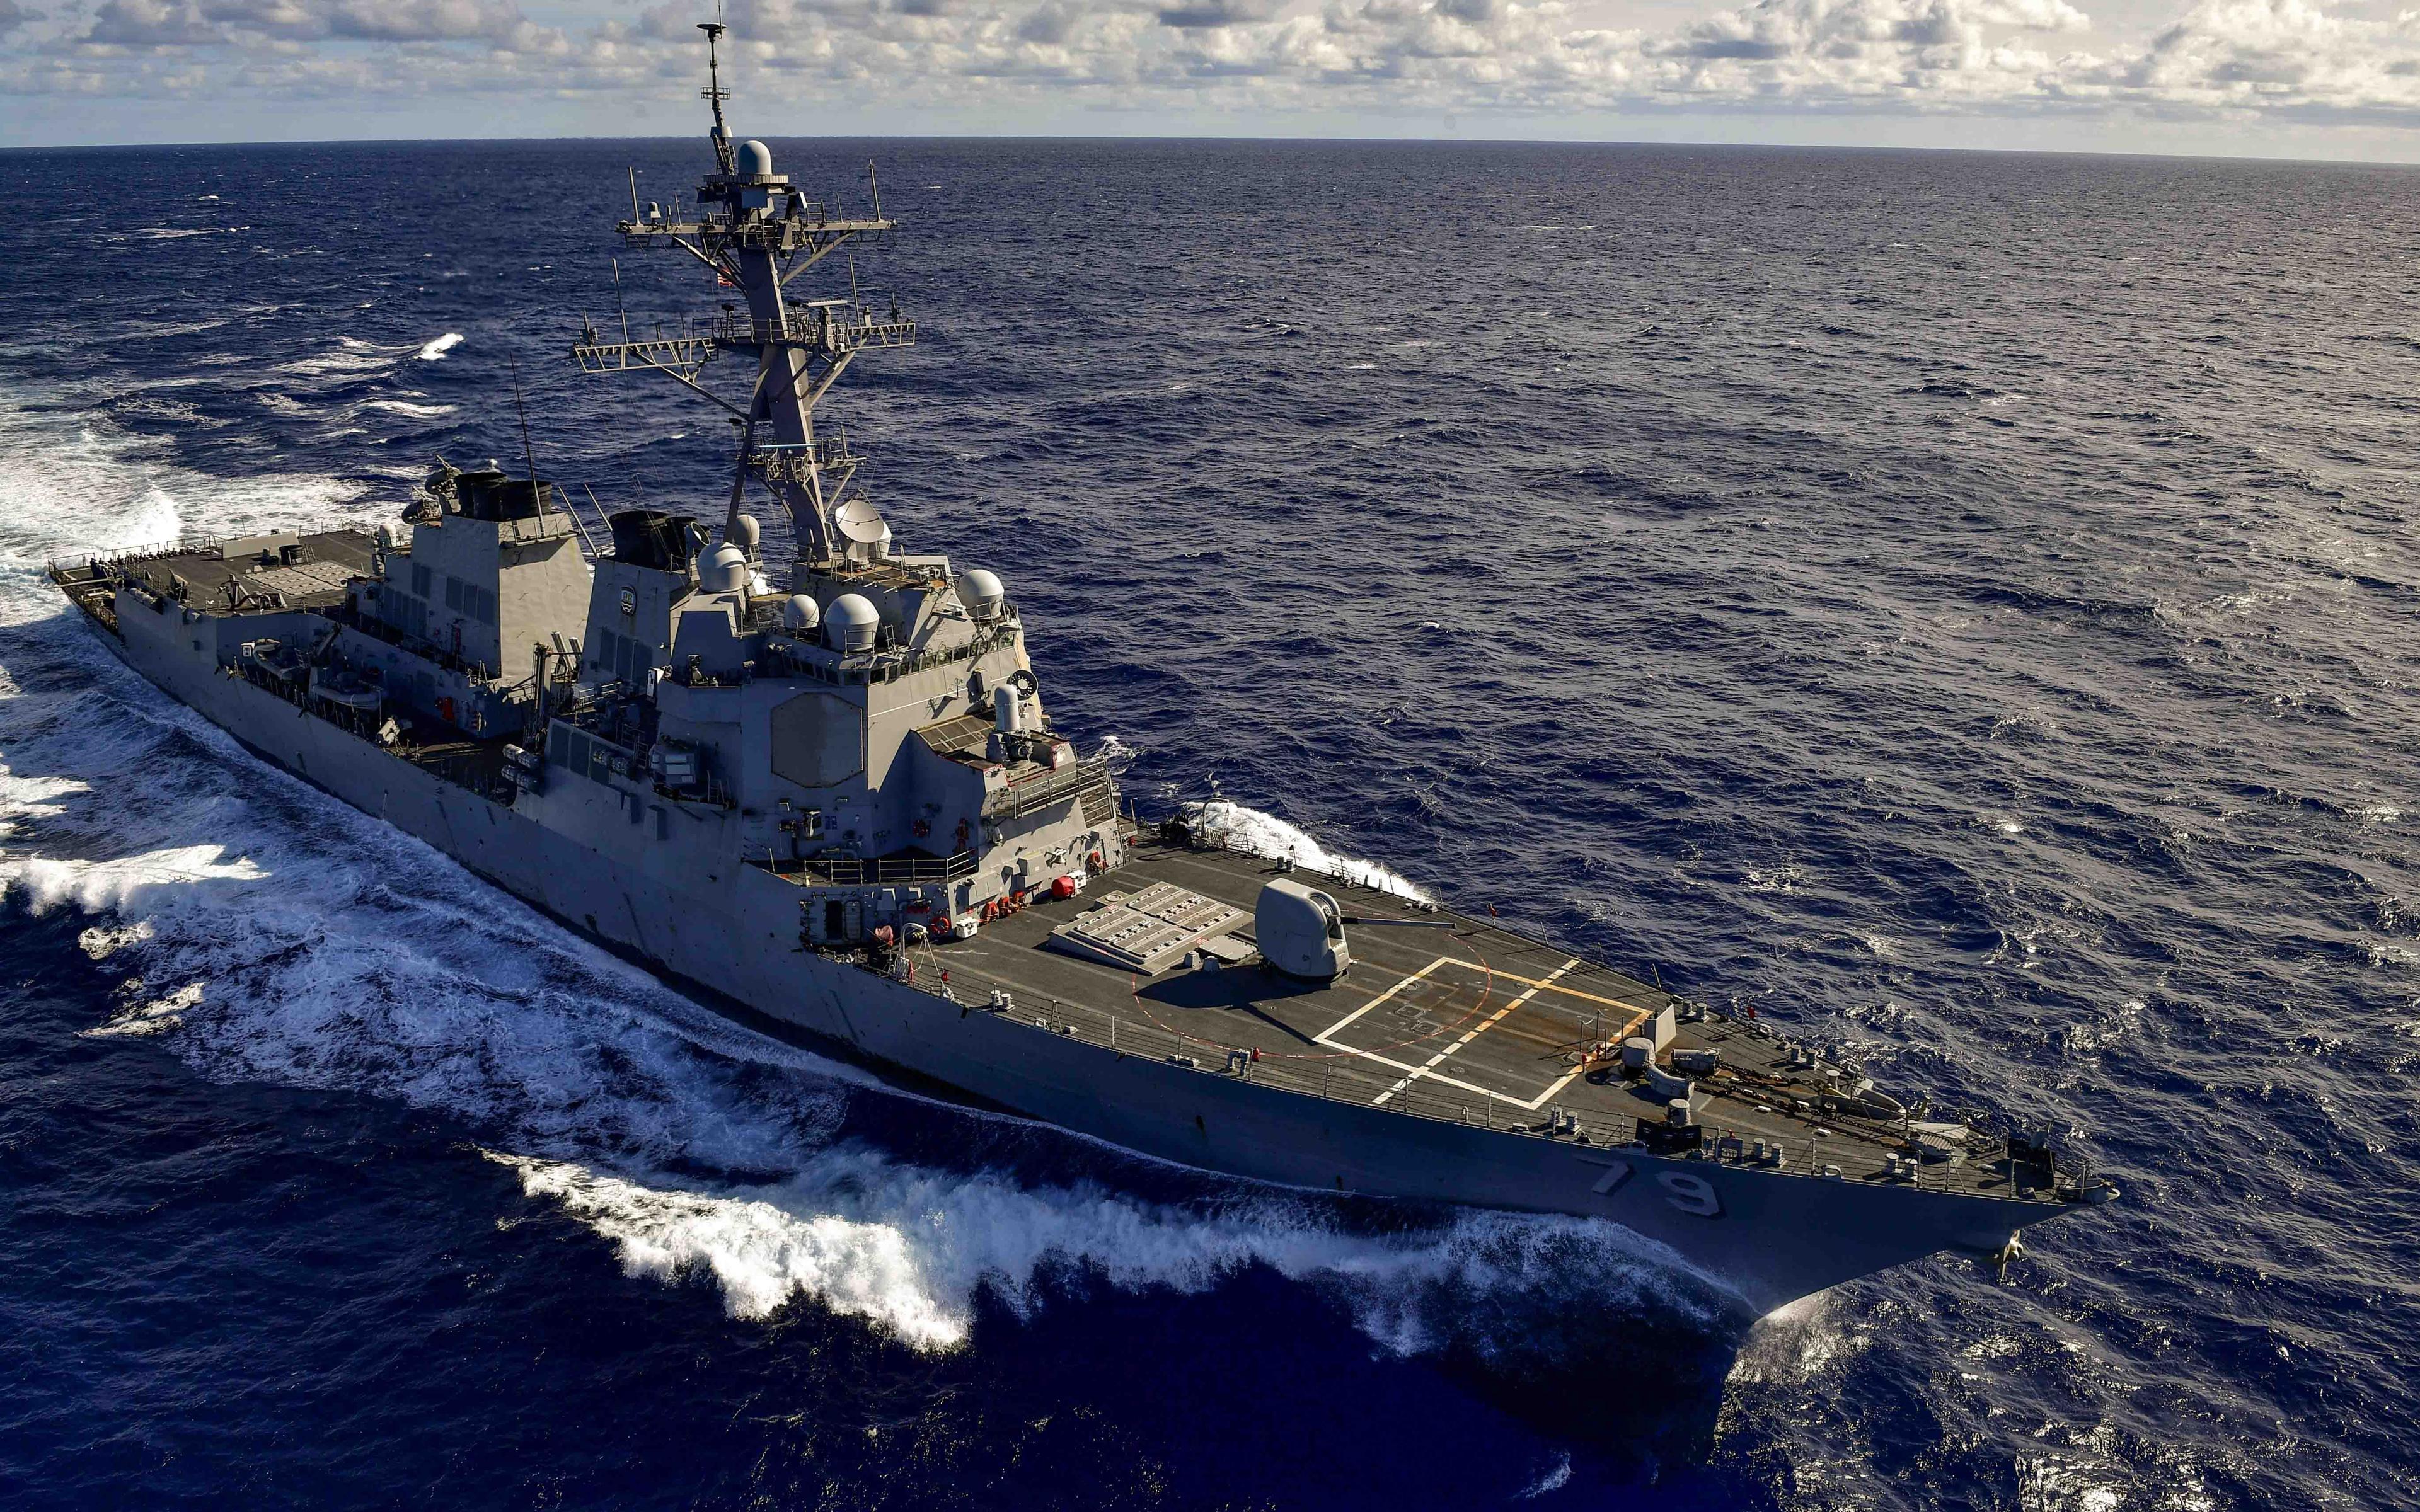 Download wallpaper USS Oscar Austin, 4k, ocean, DDG- destroyer